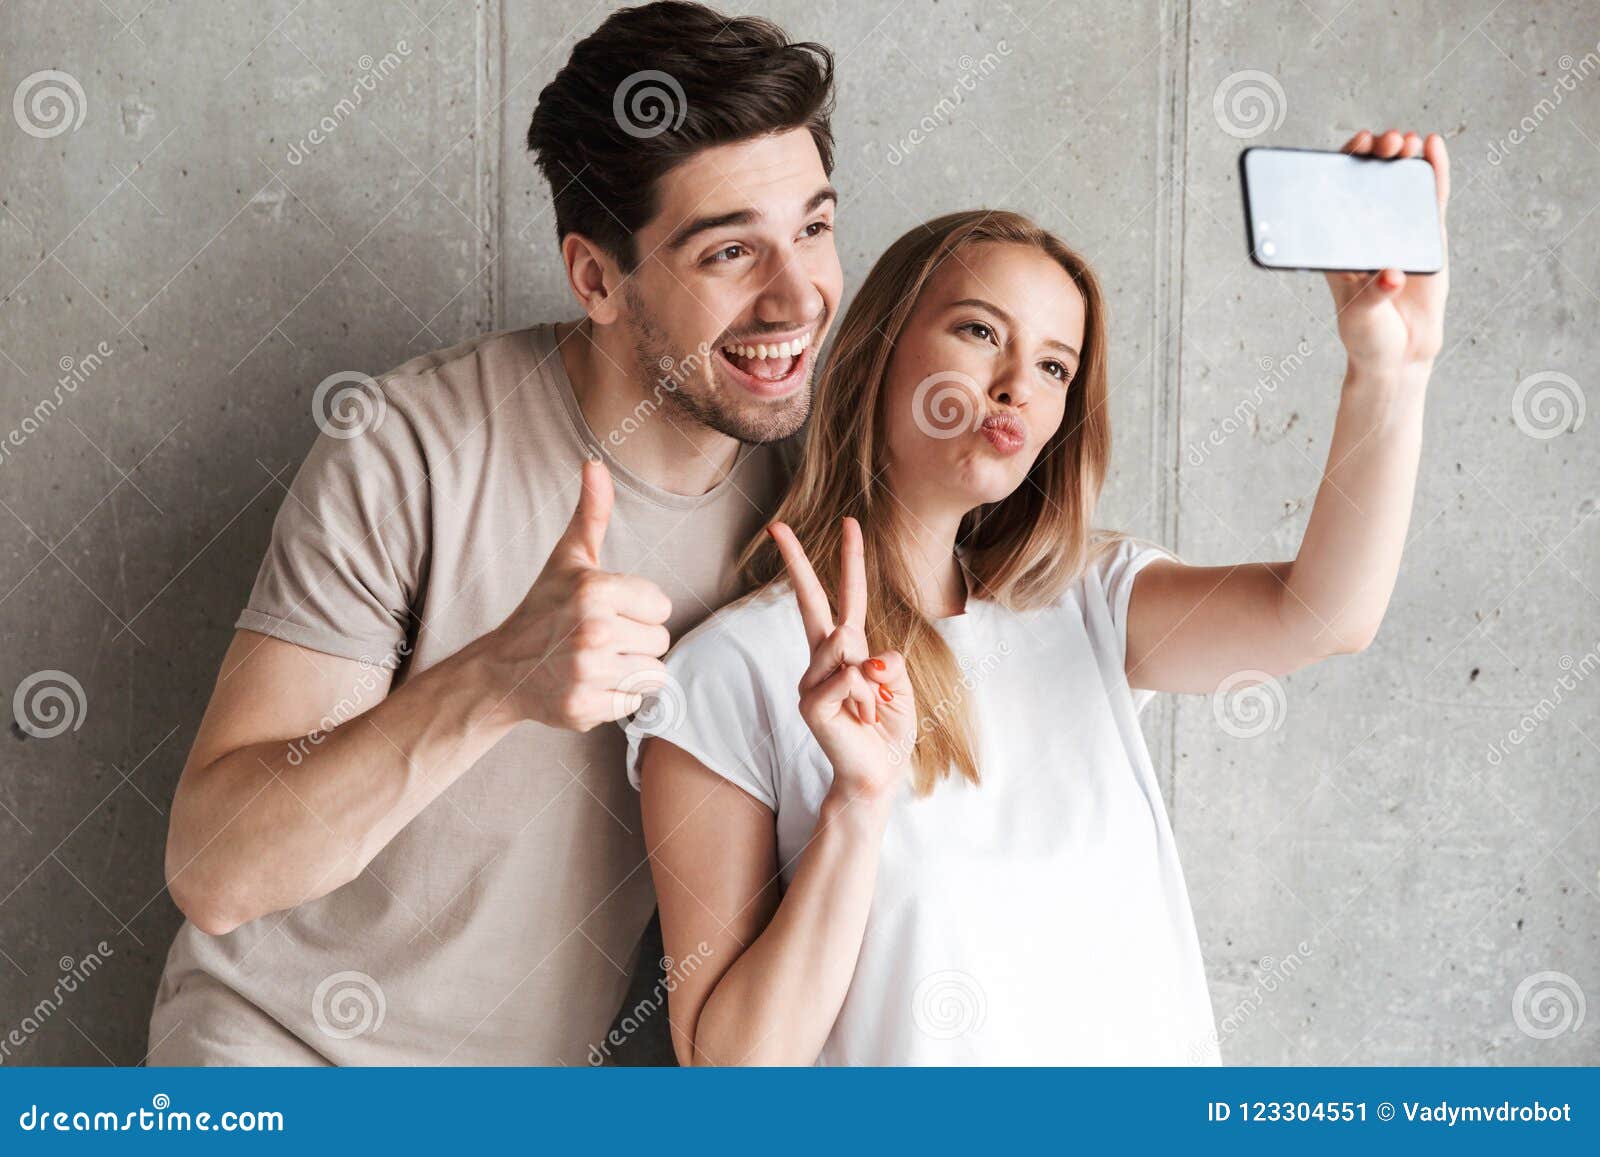 Image Of Two Joyful People Man And Woman 20s Taking Selfie Photo Stock 